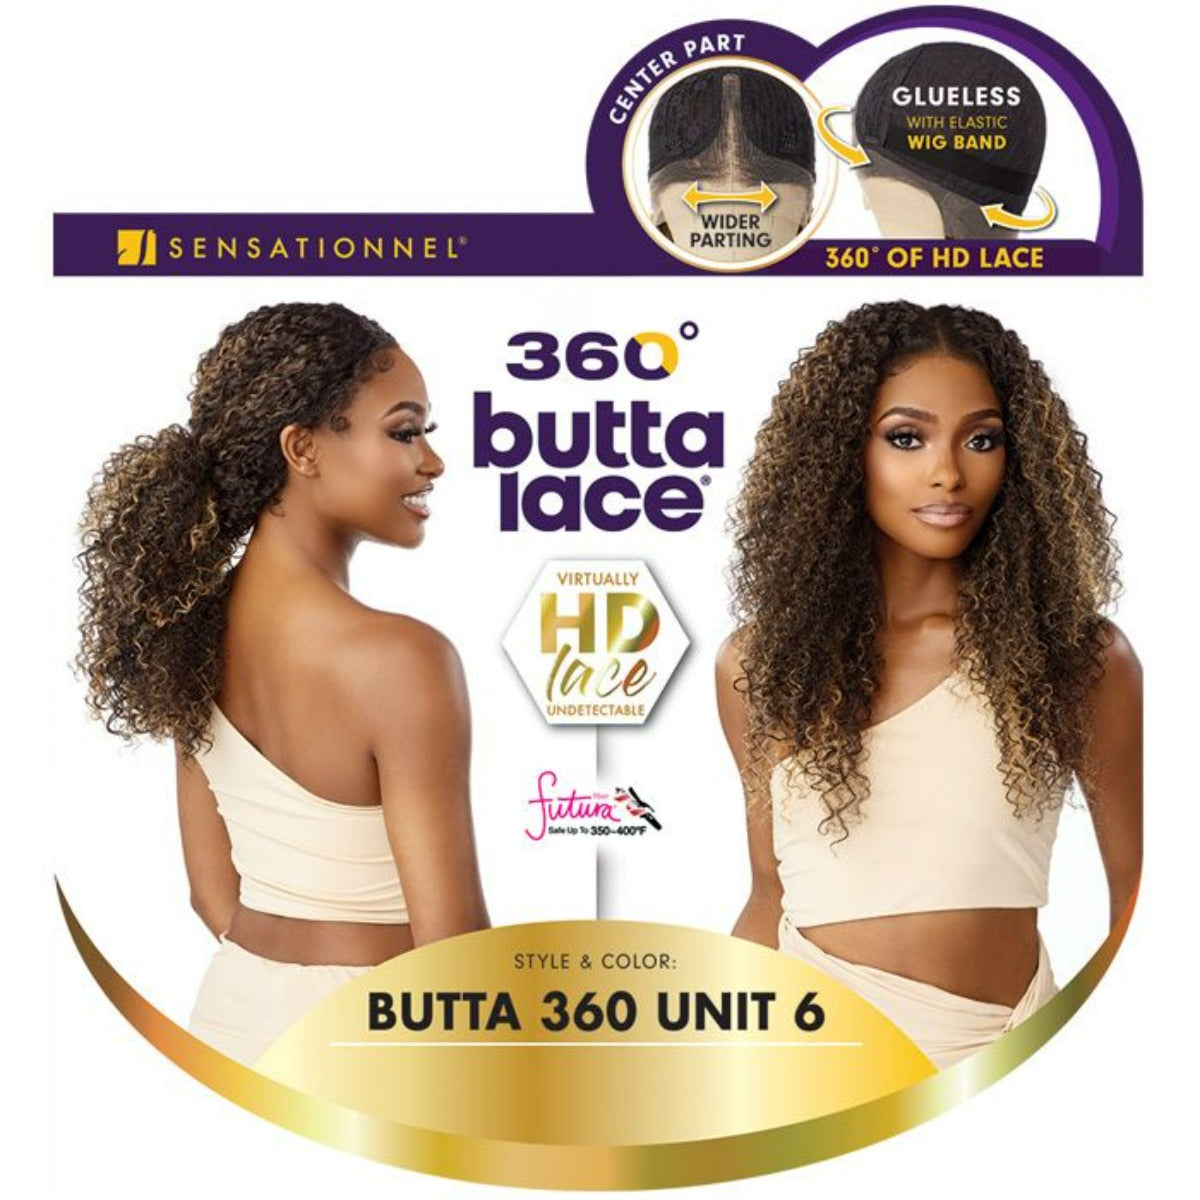 Sensationnel Butta Lace 360 Glueless HD Lace Wig BUTTA 360 UNIT 6